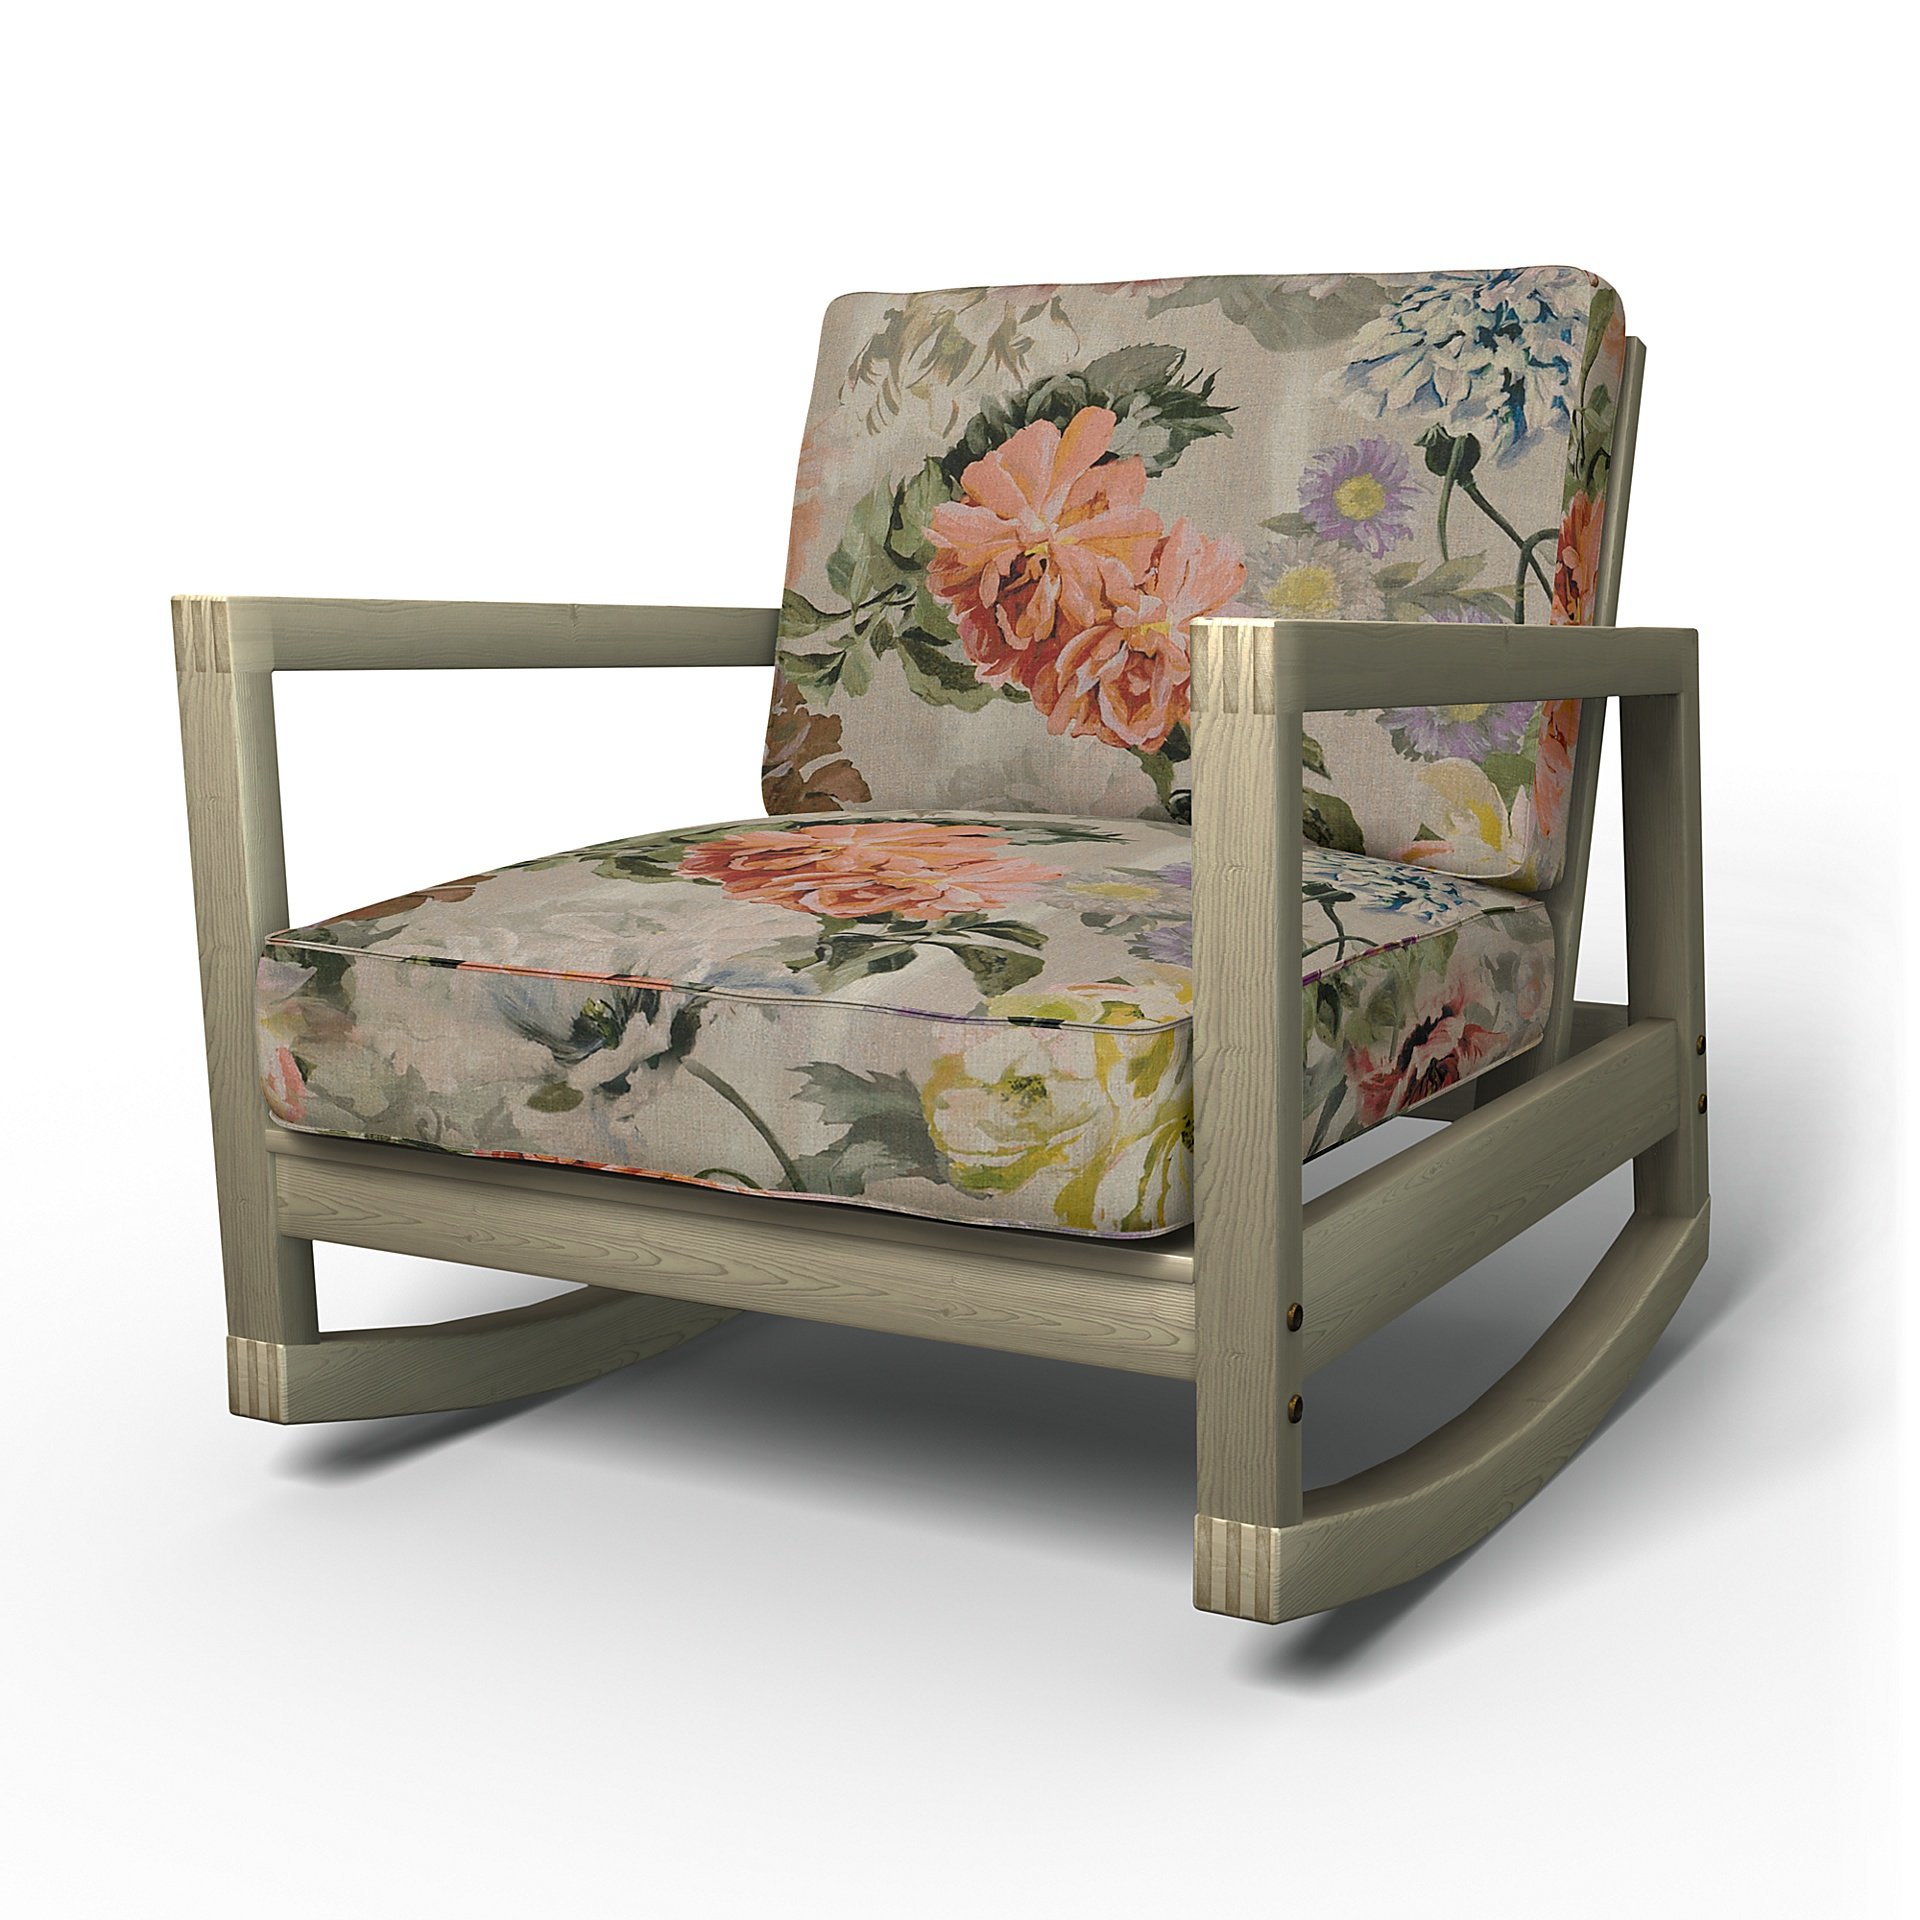 IKEA - Lillberg Rocking Chair Cover, Delft Flower - Tuberose, Linen - Bemz